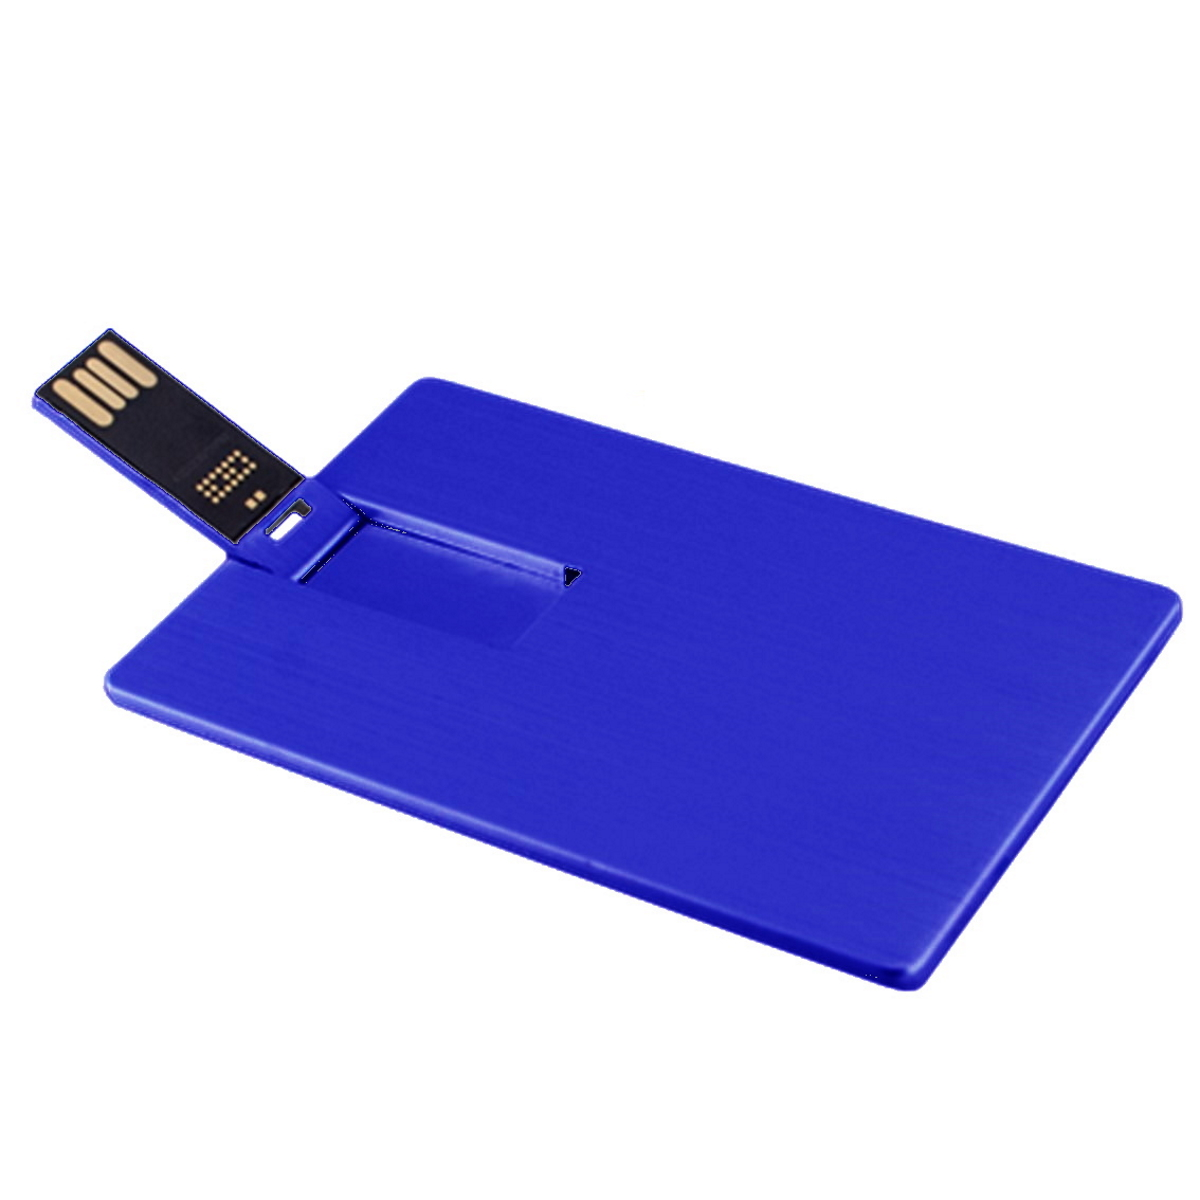 (Blau, USB-Stick Metall-Kreditkarte GB) GERMANY ® 1 USB